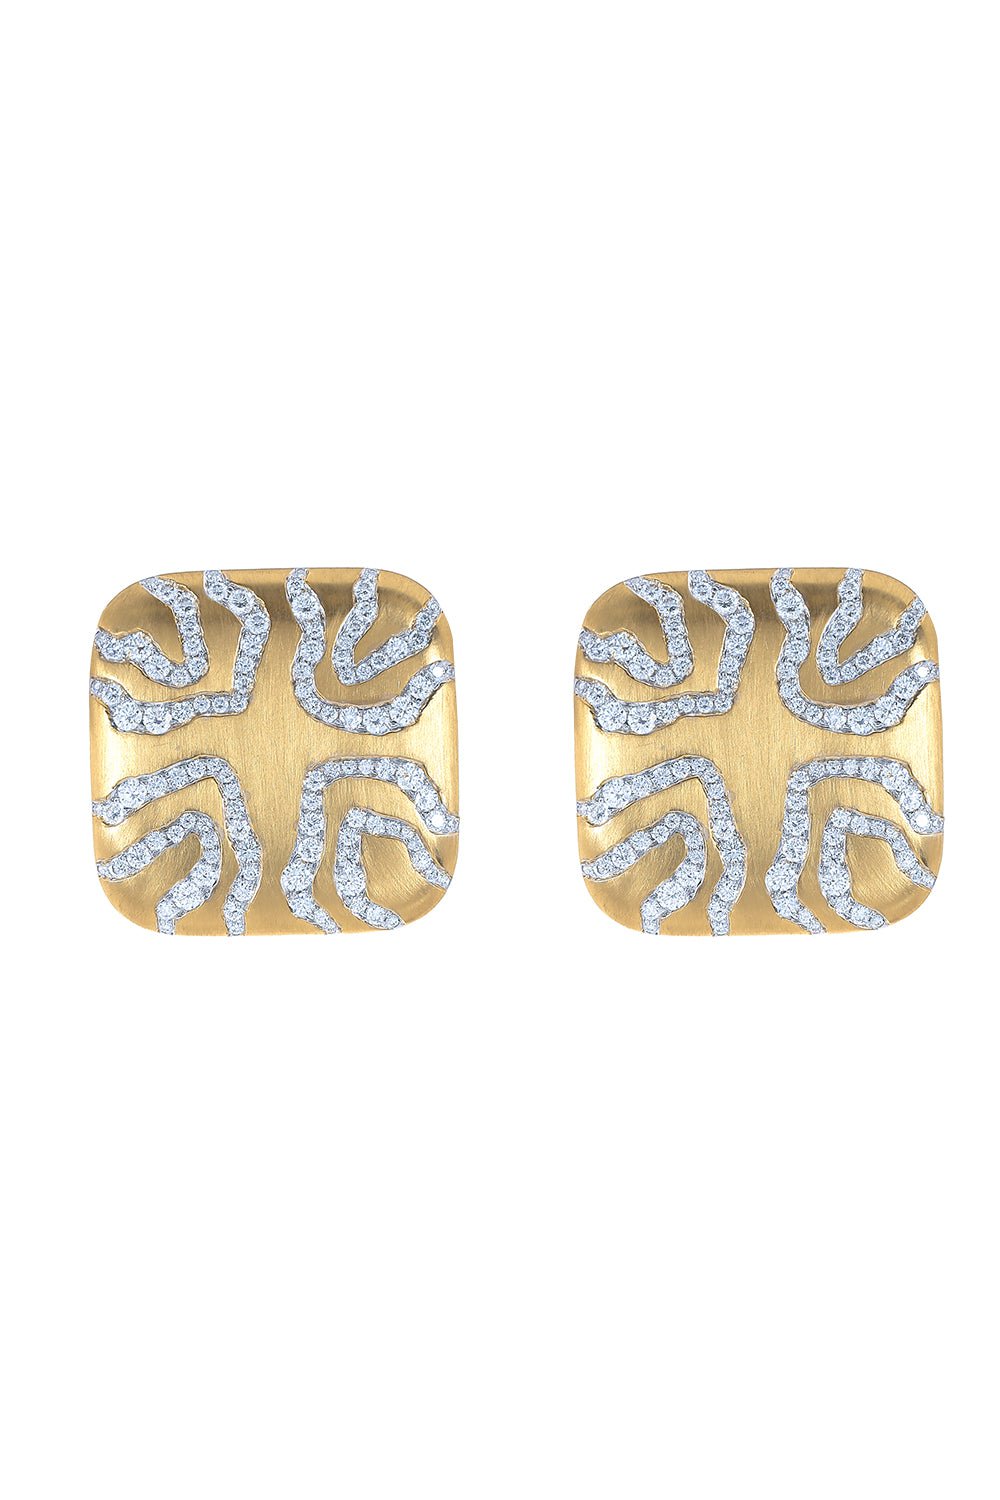 ARUNASHI-Cushion Brushed Diamond Earrings-YELLOW GOLD